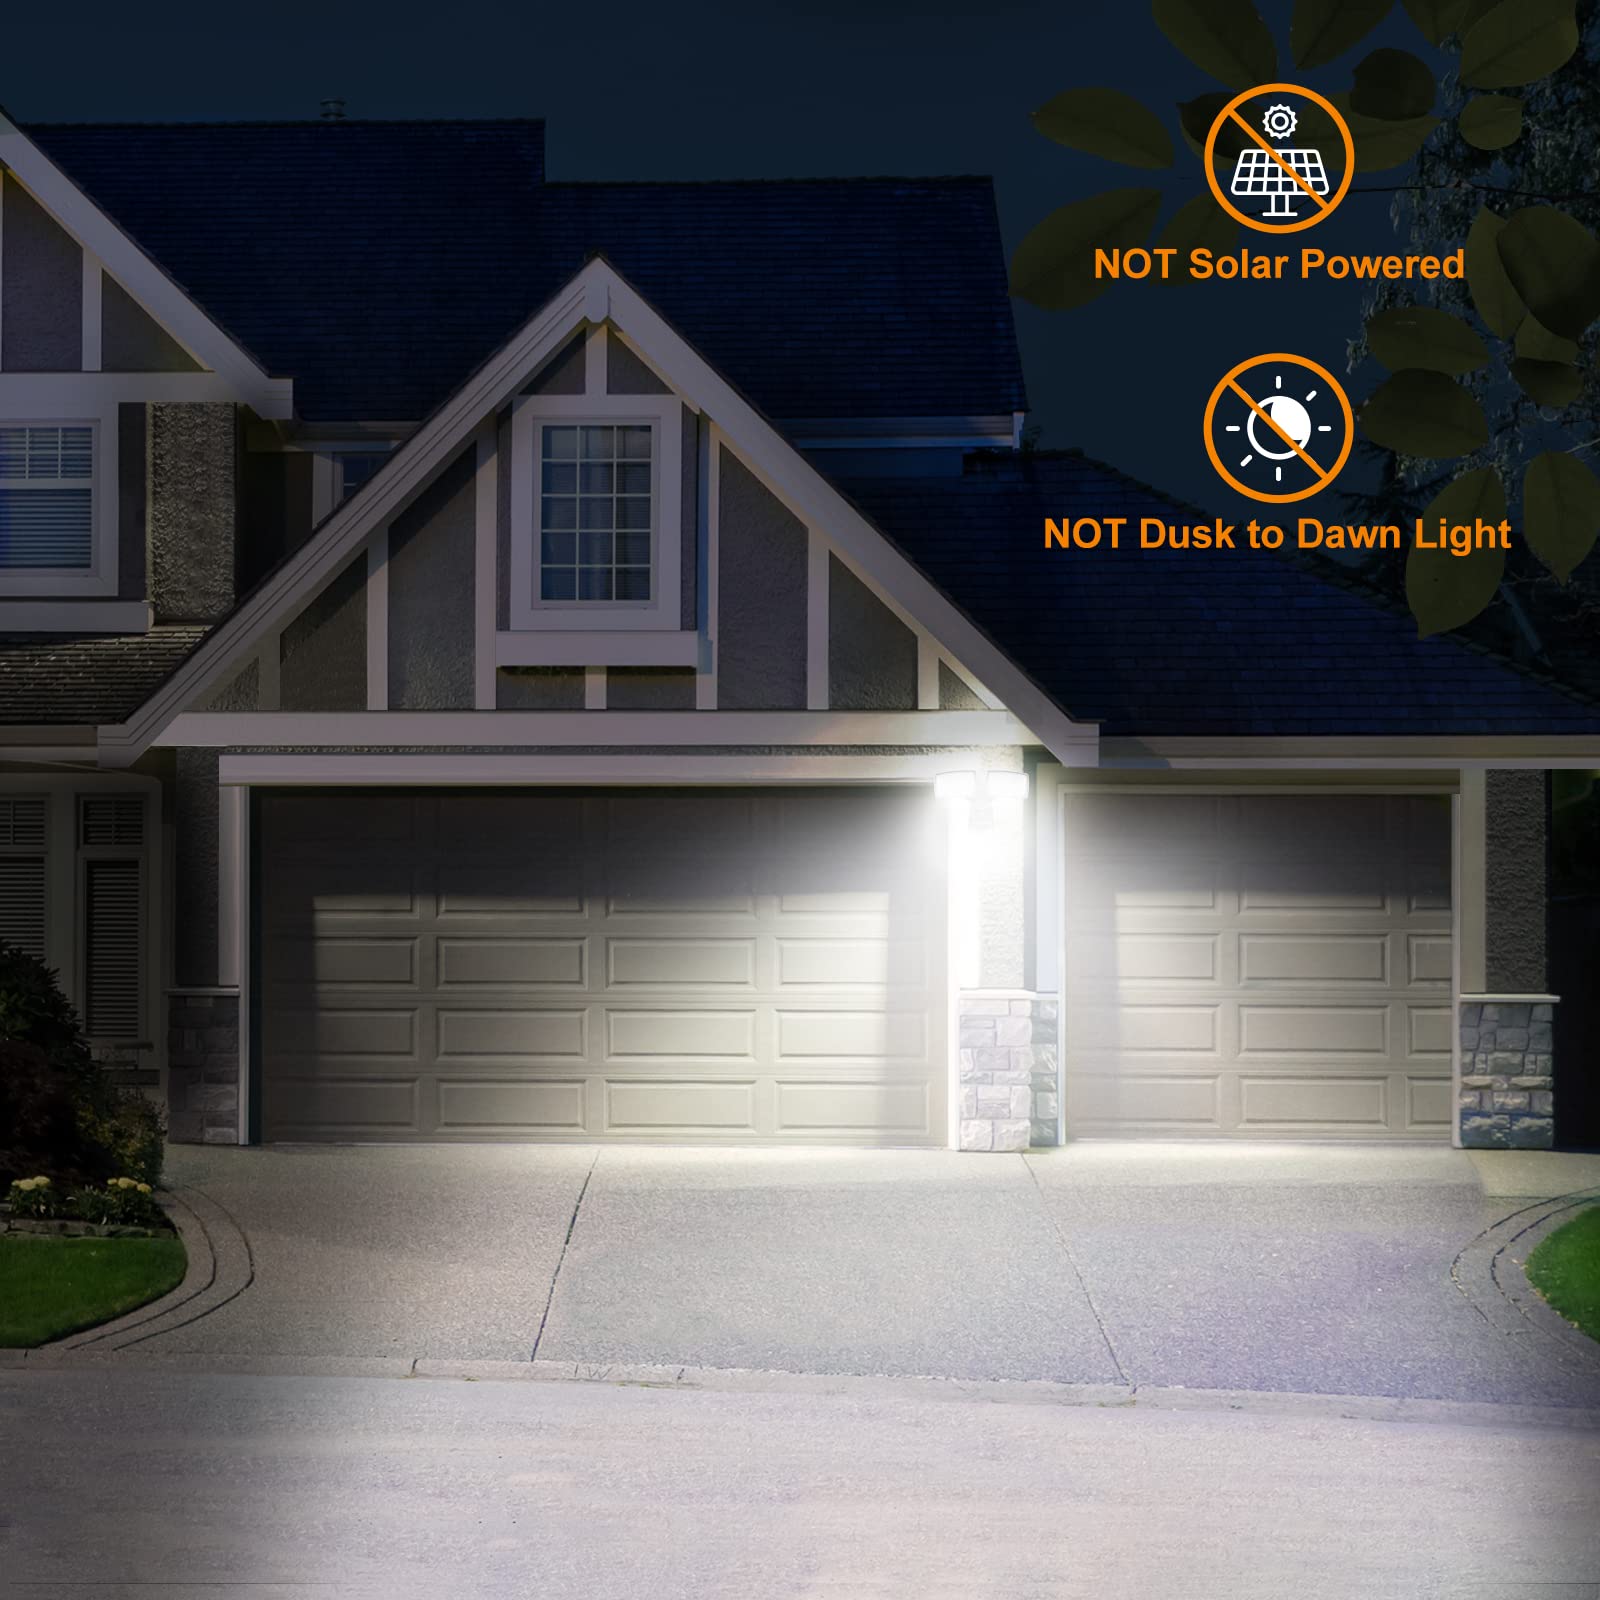 LEPOWER LED Motion Sensor Security Lights Outdoor, 30W 3200LM, 5500K, IP65 Waterproof, 2 Head Motion Detector Flood Light for Garage, Yard, Porch (NOT Solar Powered)